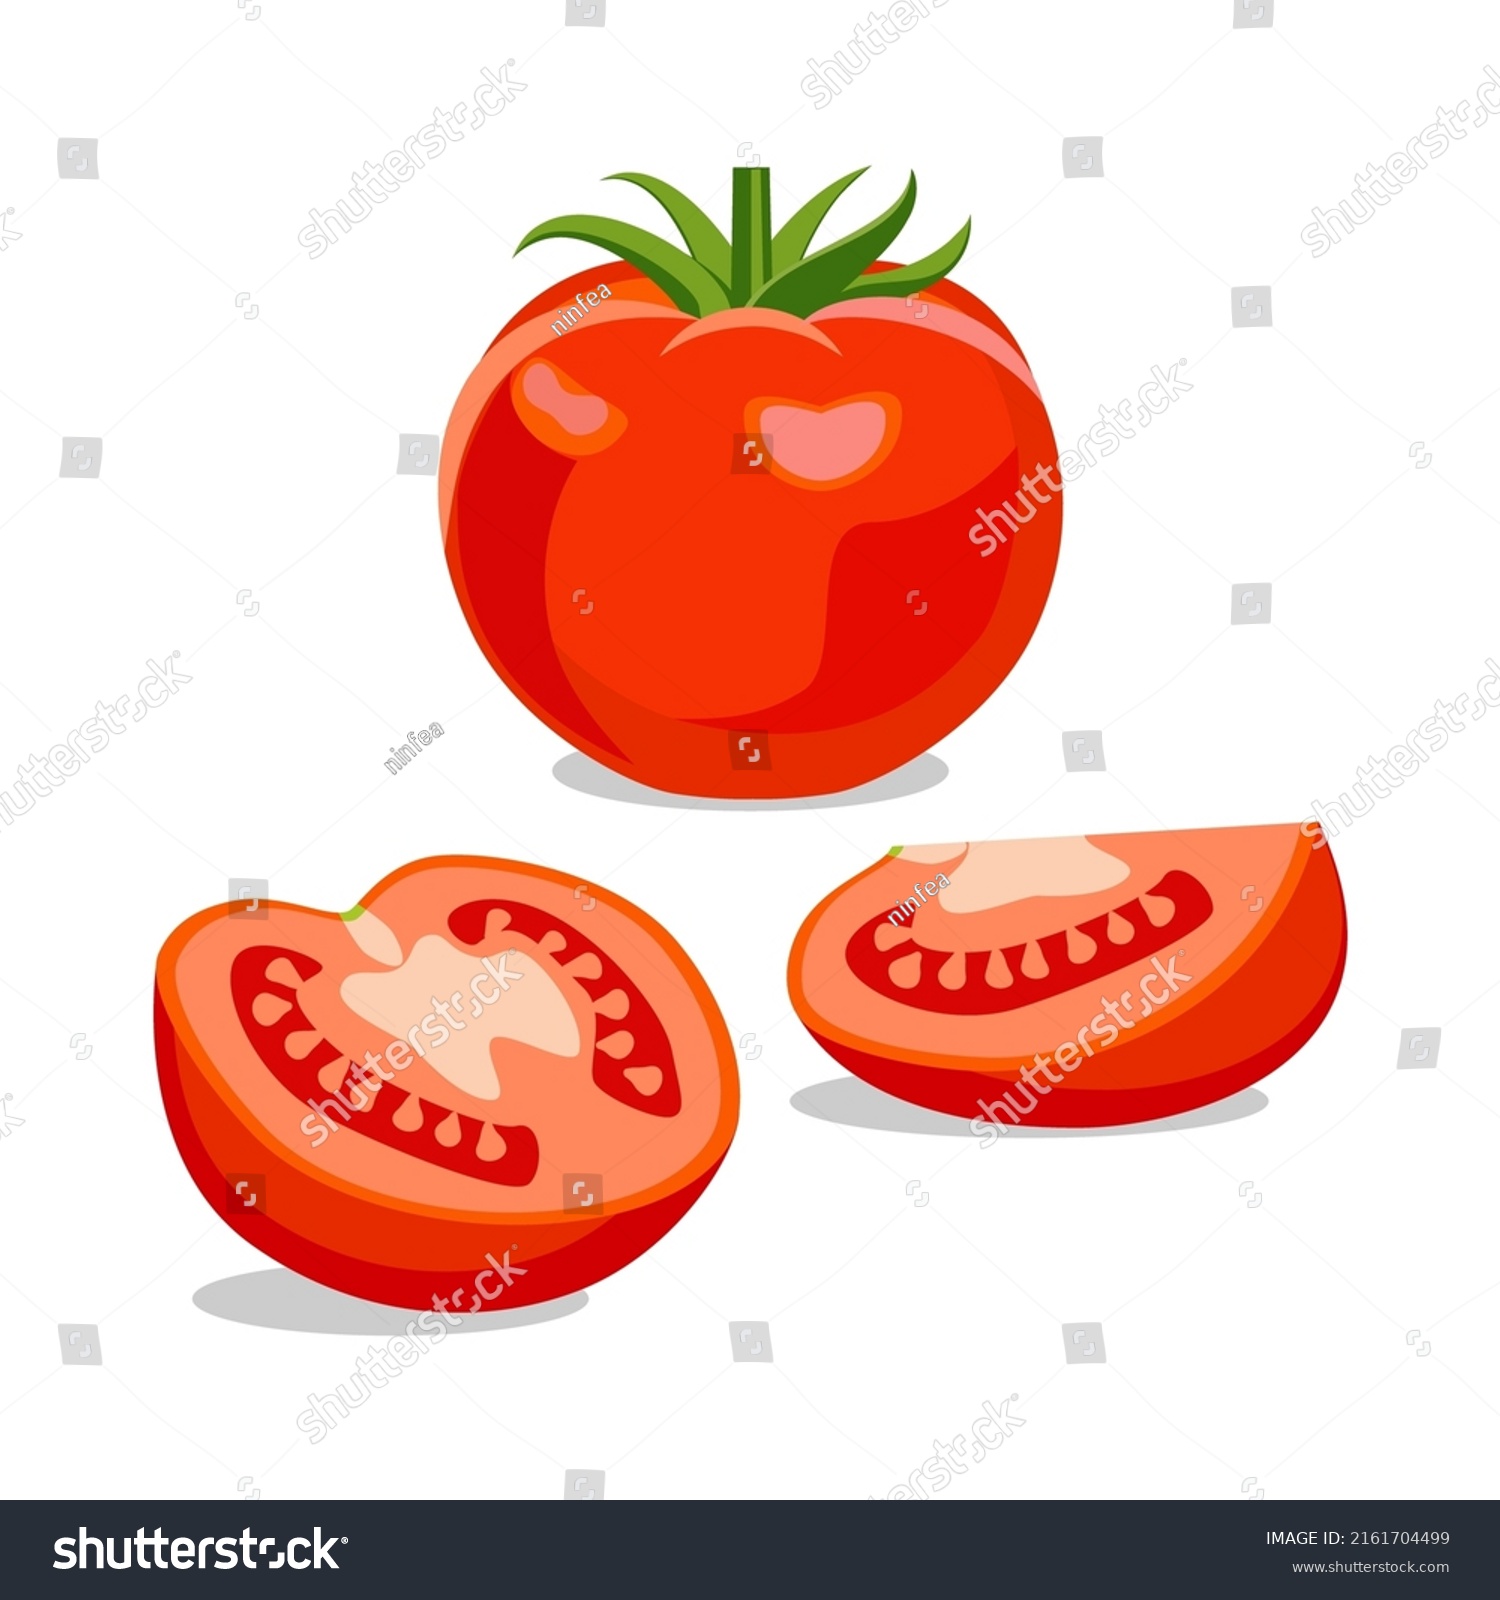 Ripe red tomato vector illustration. Whole tomato with leaves, half tomato, tomato slice isolated on white background #2161704499